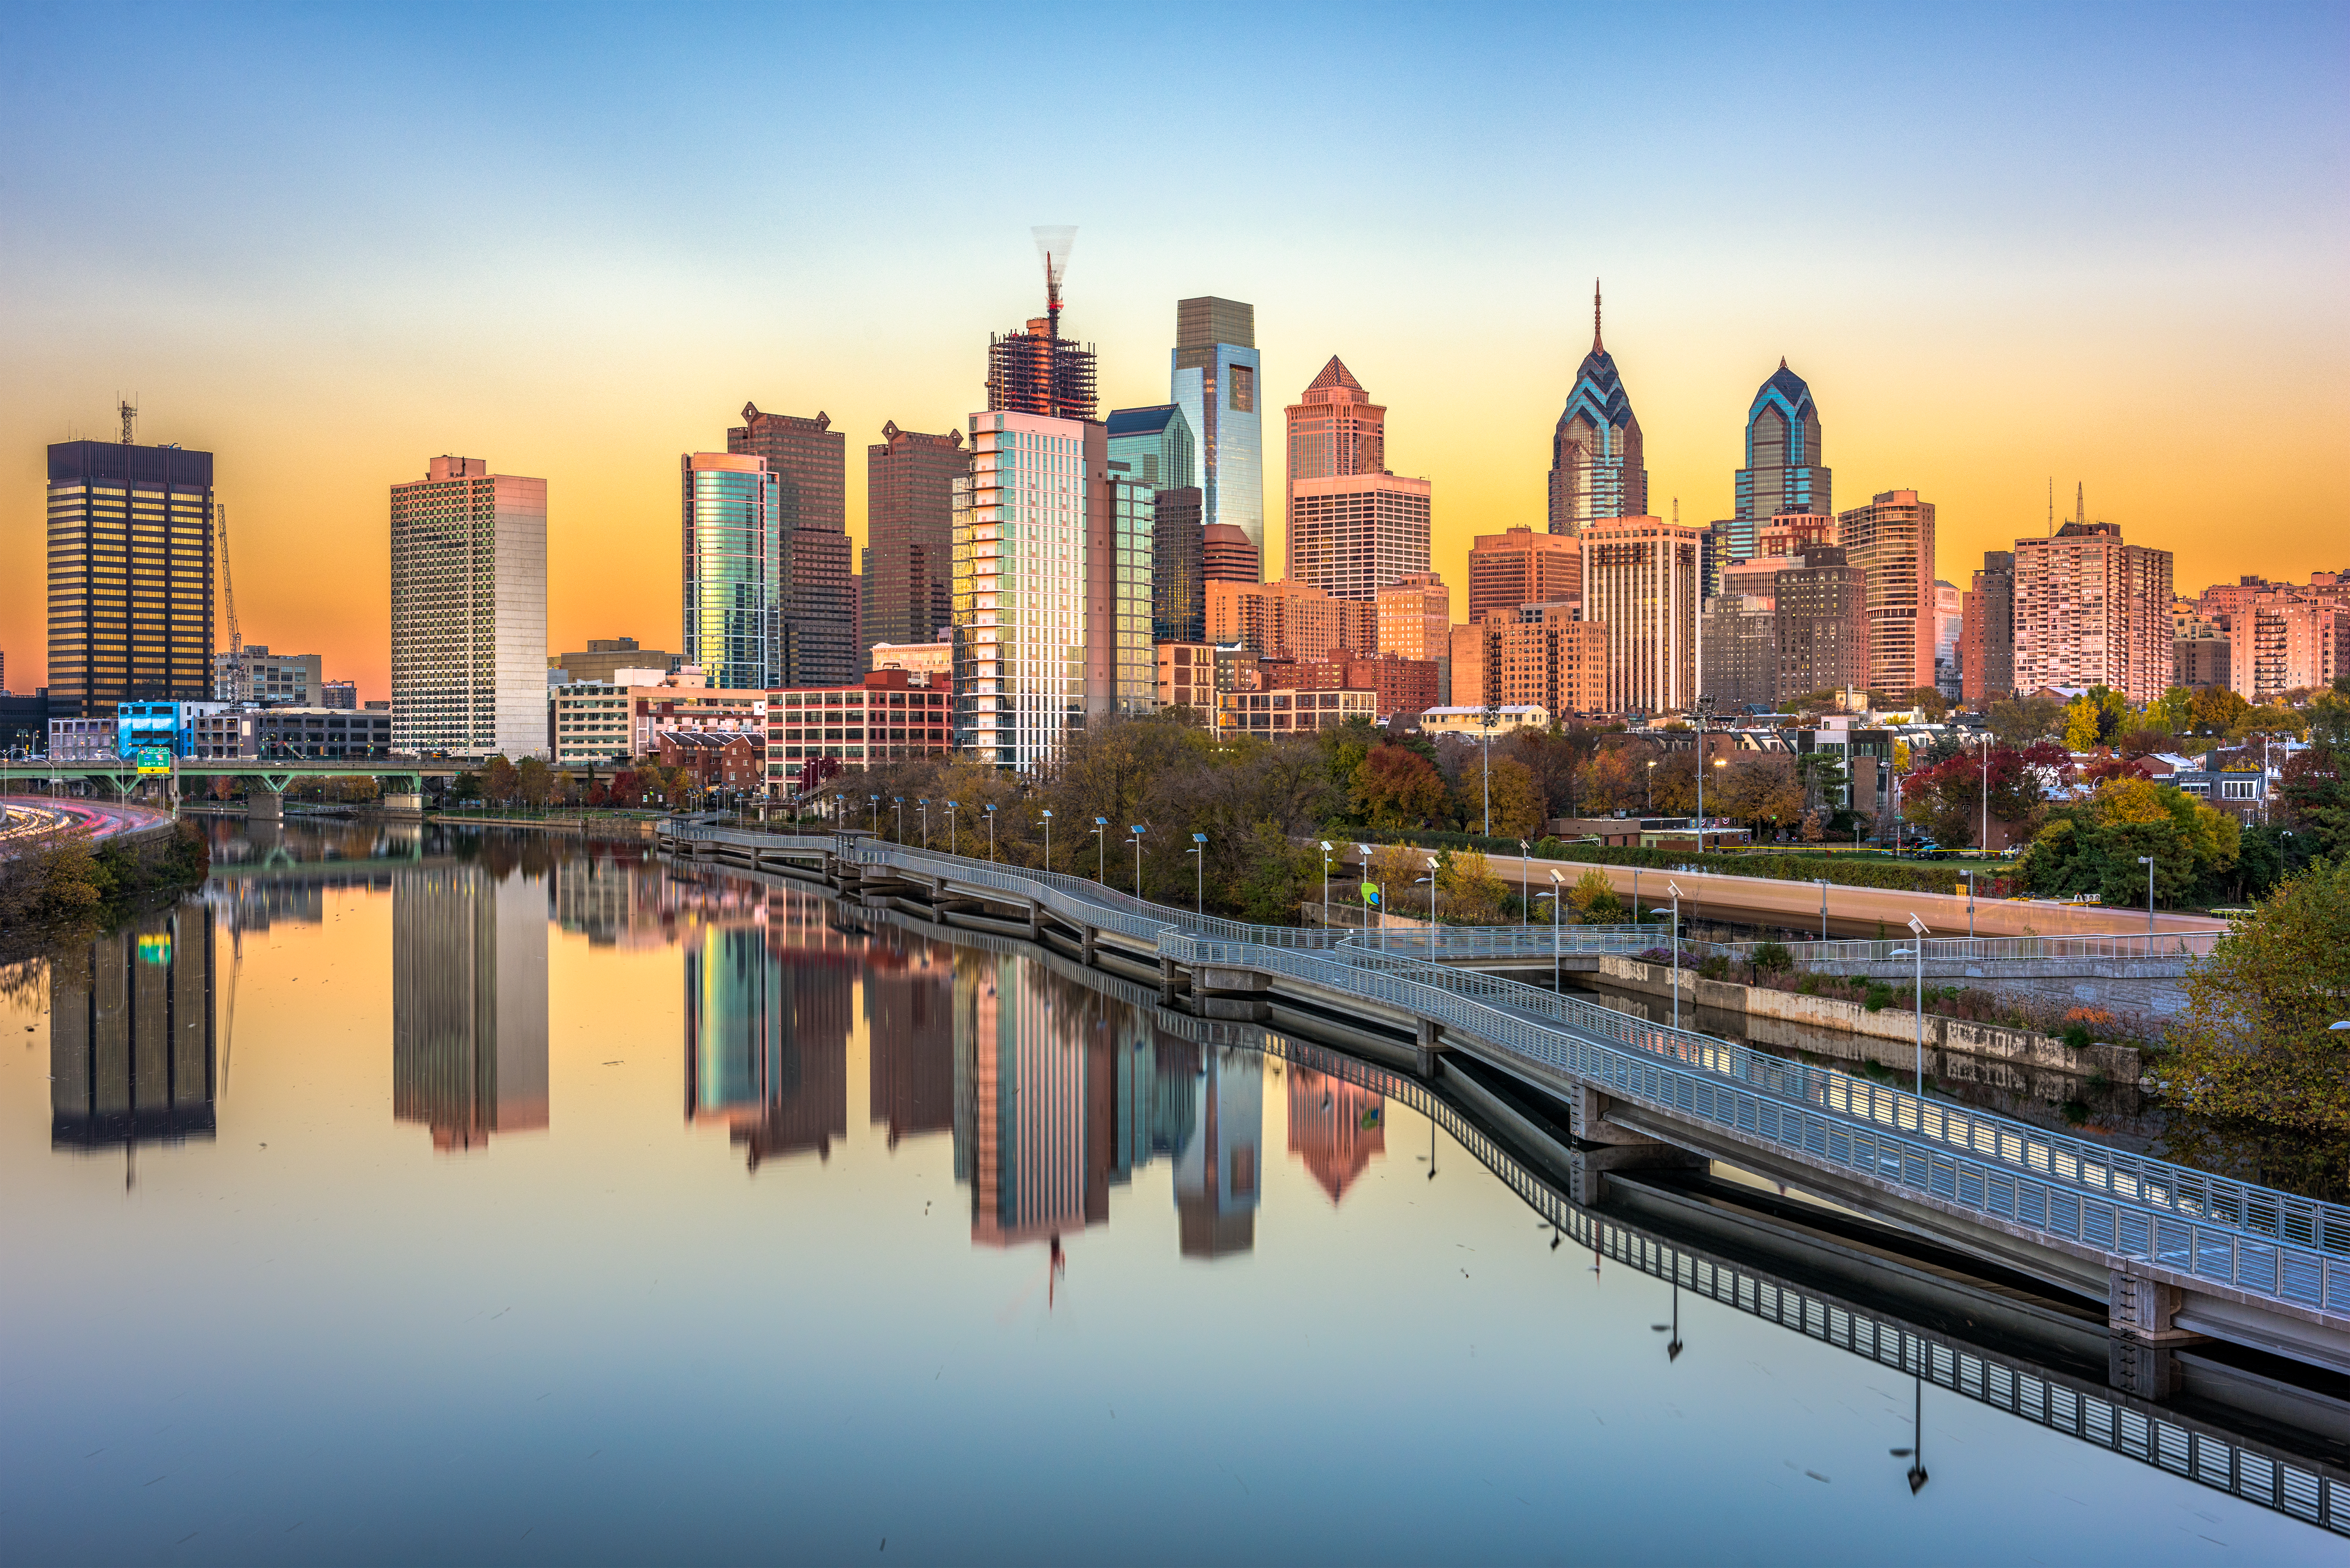 City Skyline of Philadelphia, PA - Find Intern Housing in Philadelphia